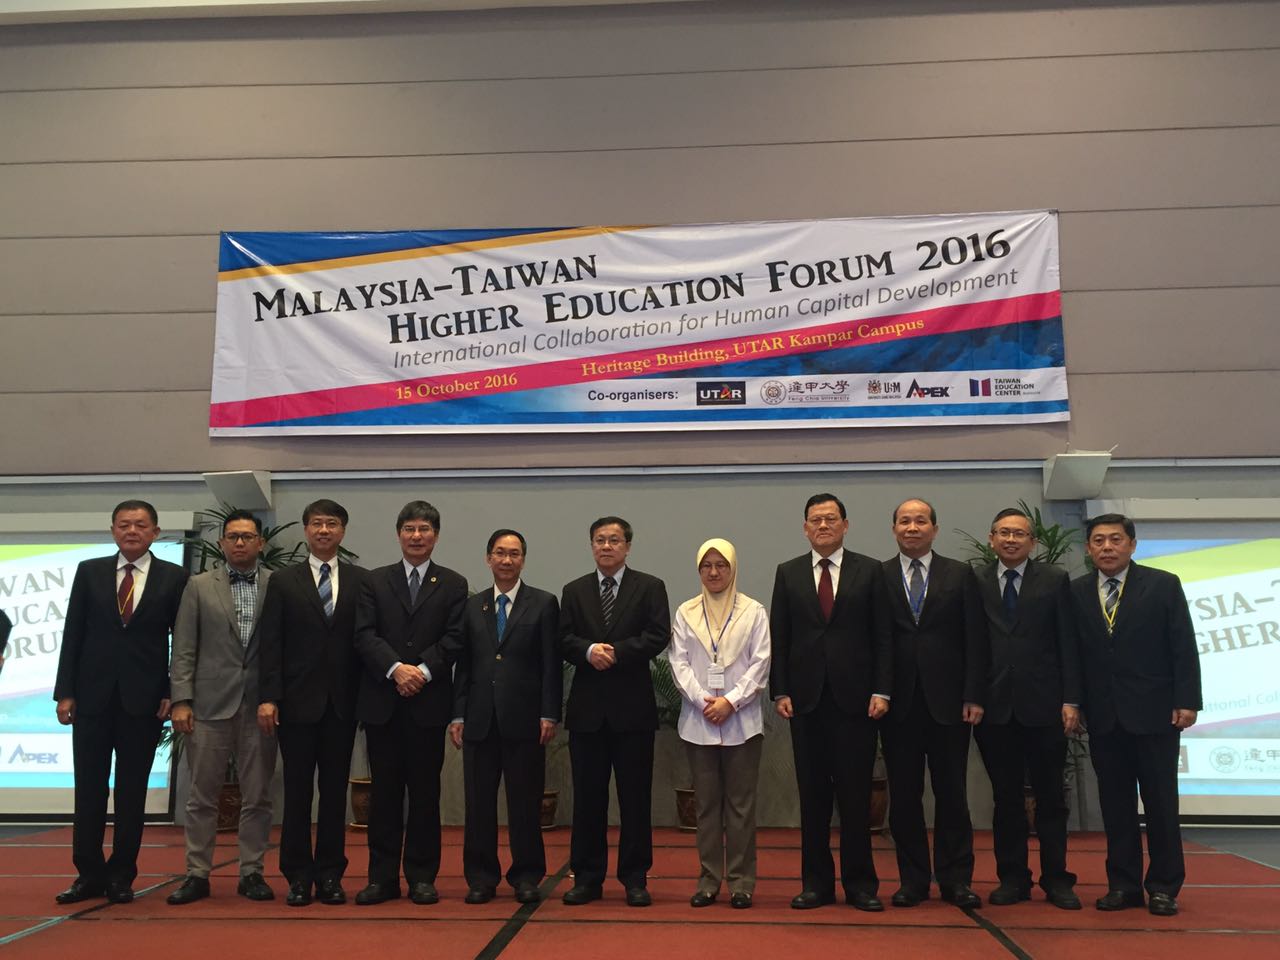 2016 Malaysia-Taiwan Higher Education Forum